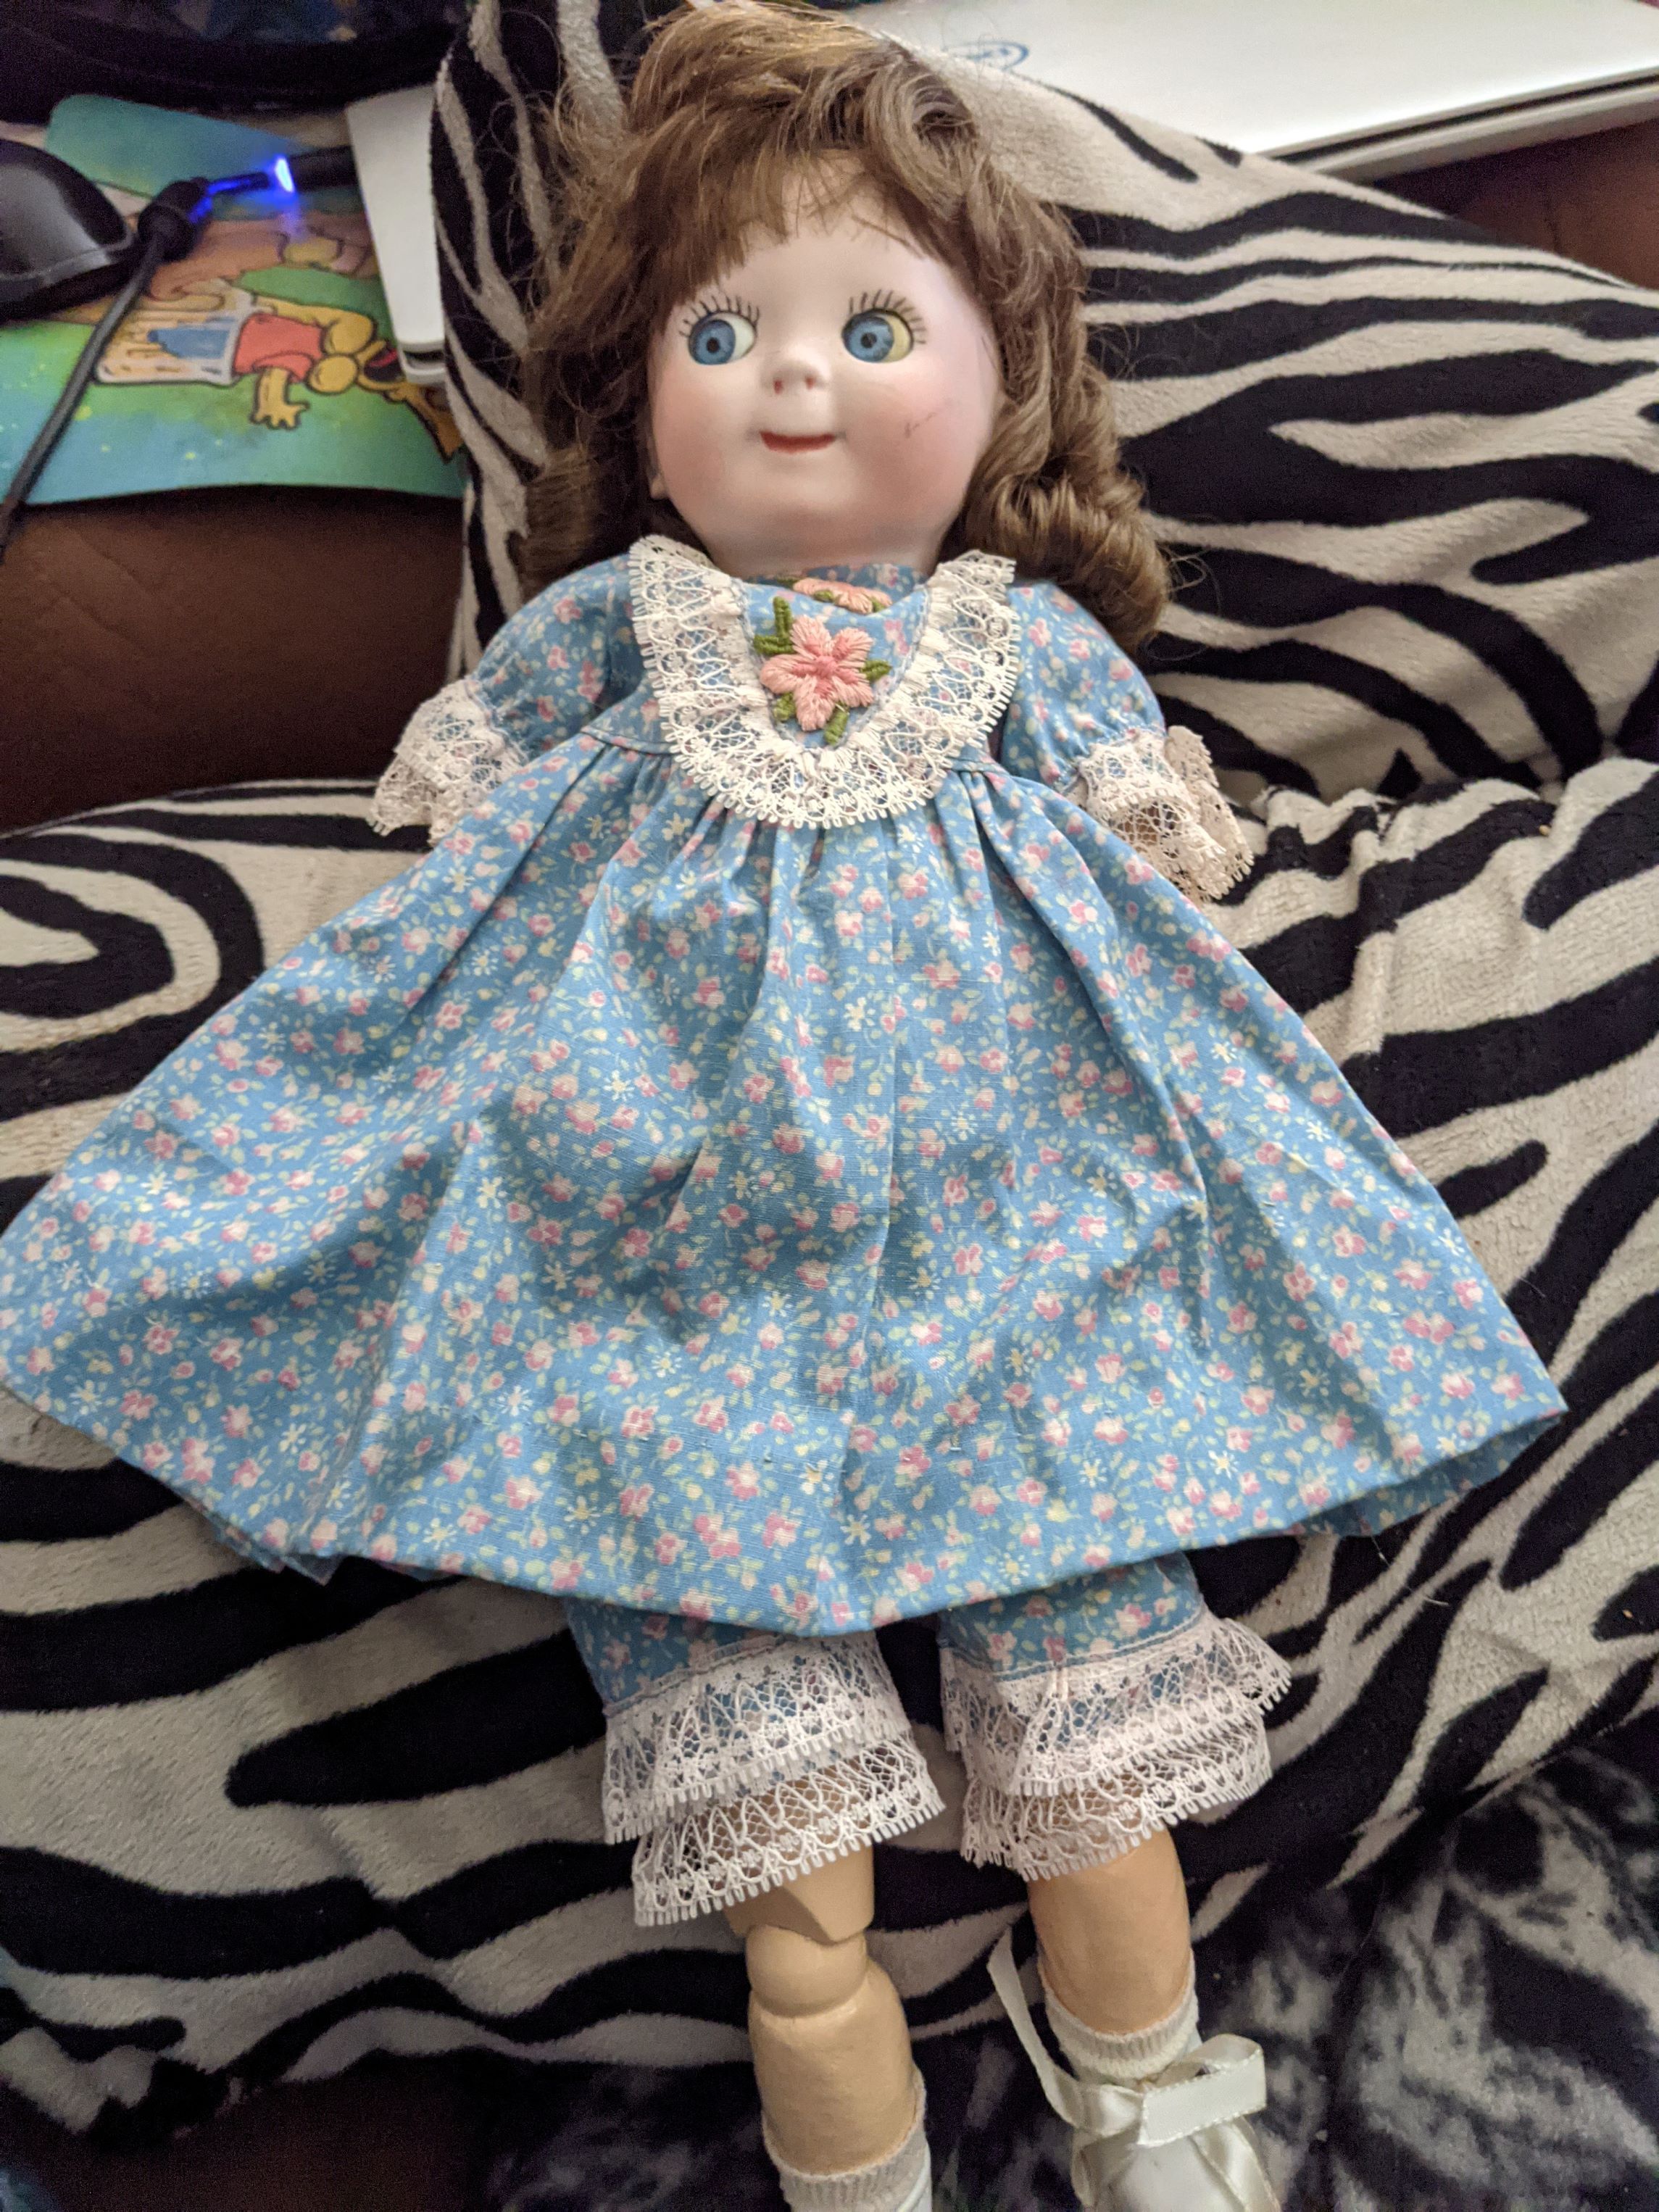 Identifying a Germany 11-jdk 221 Doll & a Rothschi... - The eBay Community